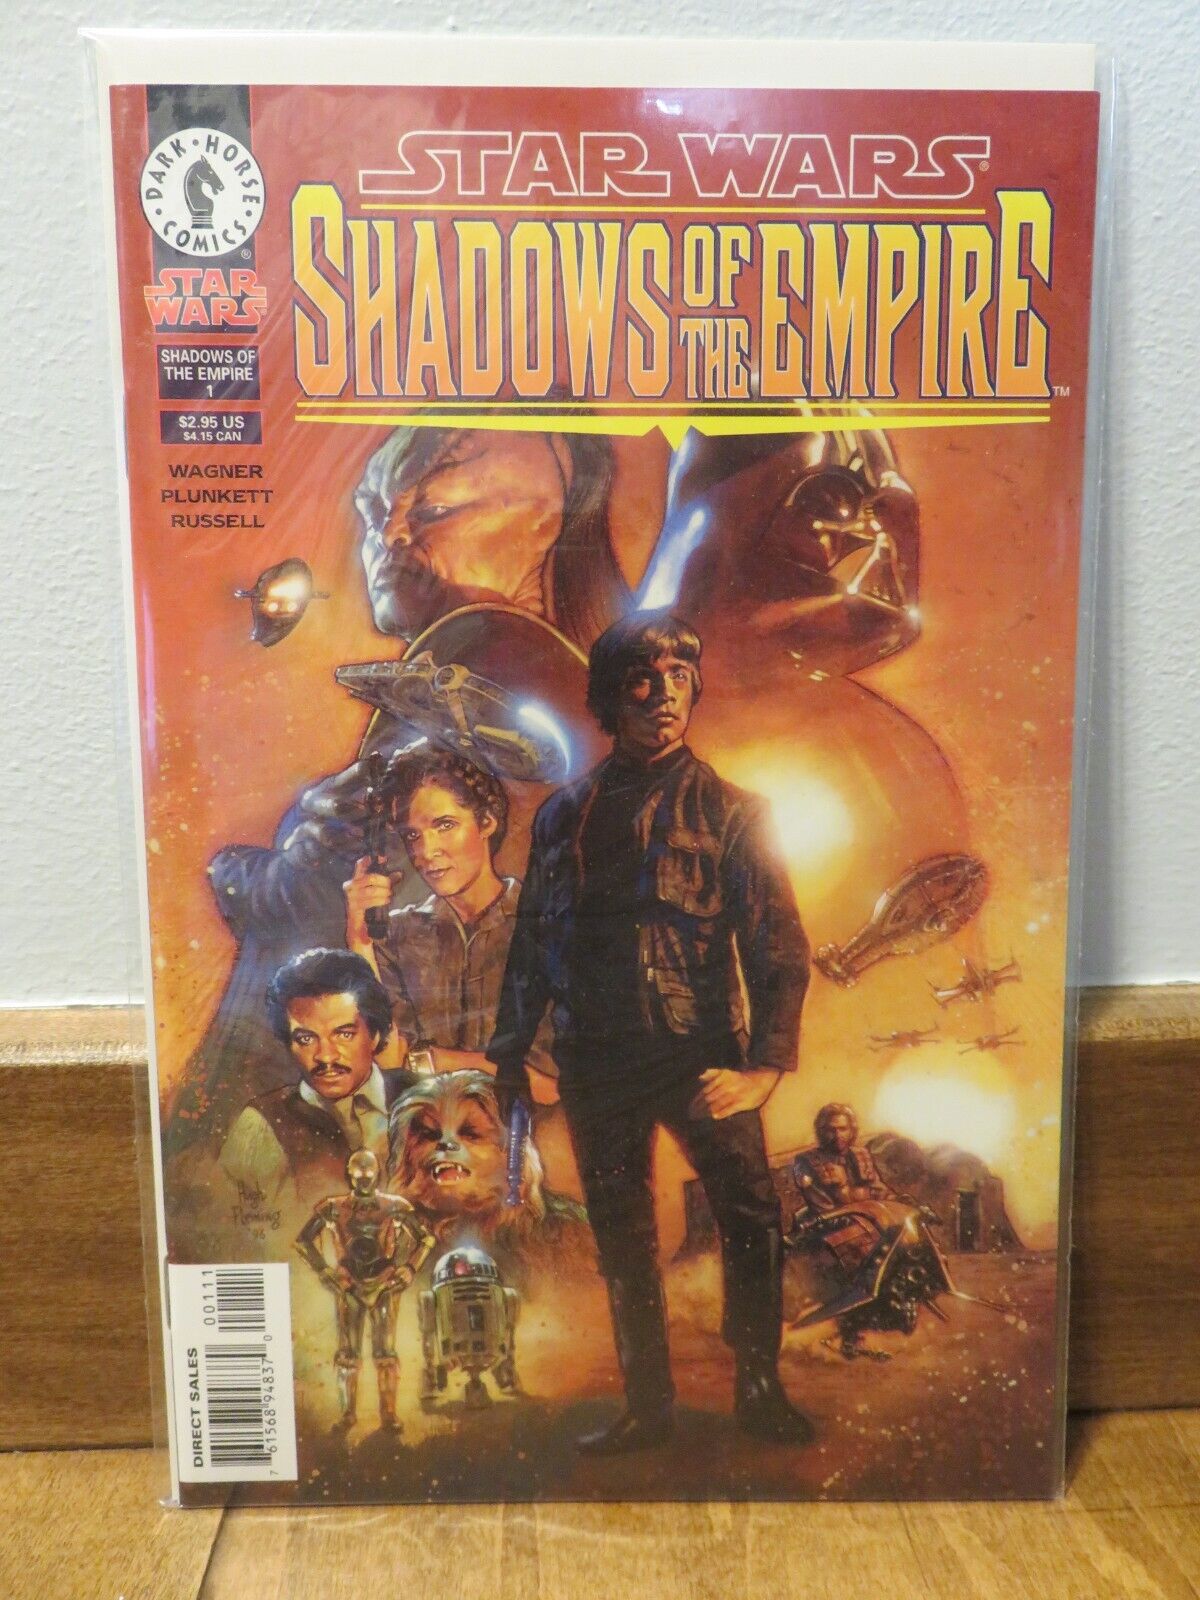 Star Wars: Shadows of the Empire #1 by Dark Horse Comics, May 1996